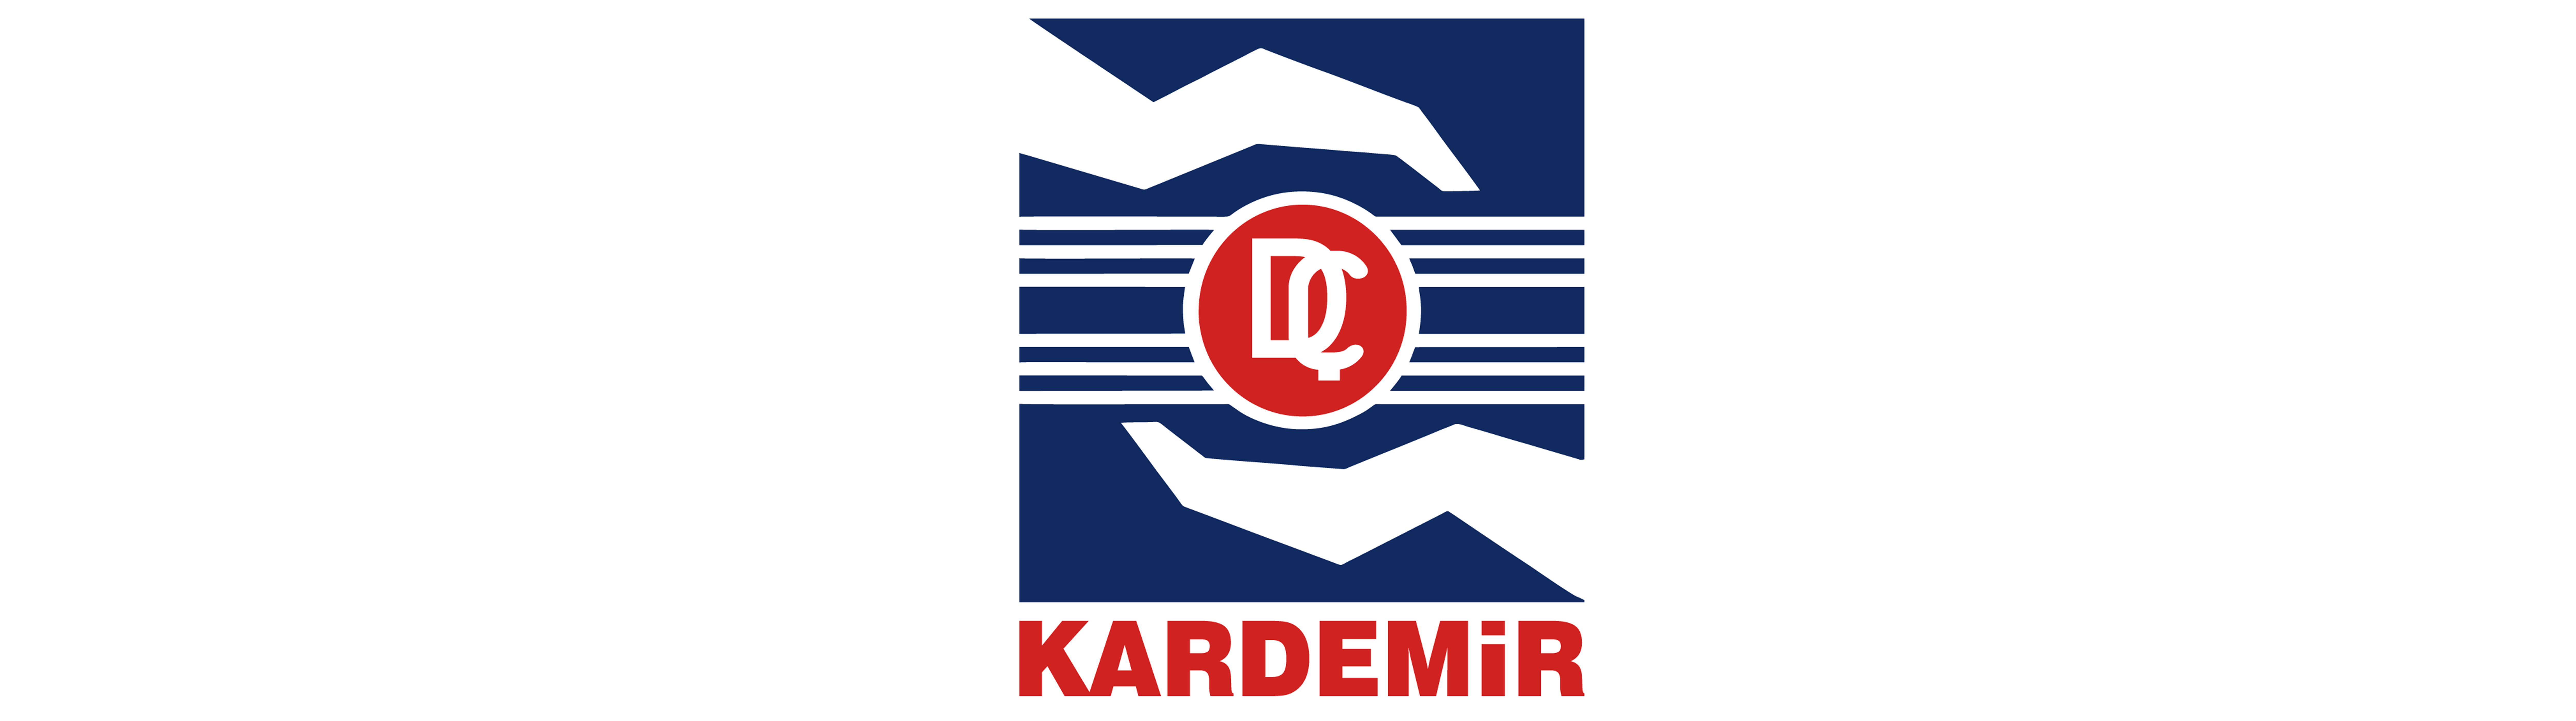 KRDMD - Kardemir